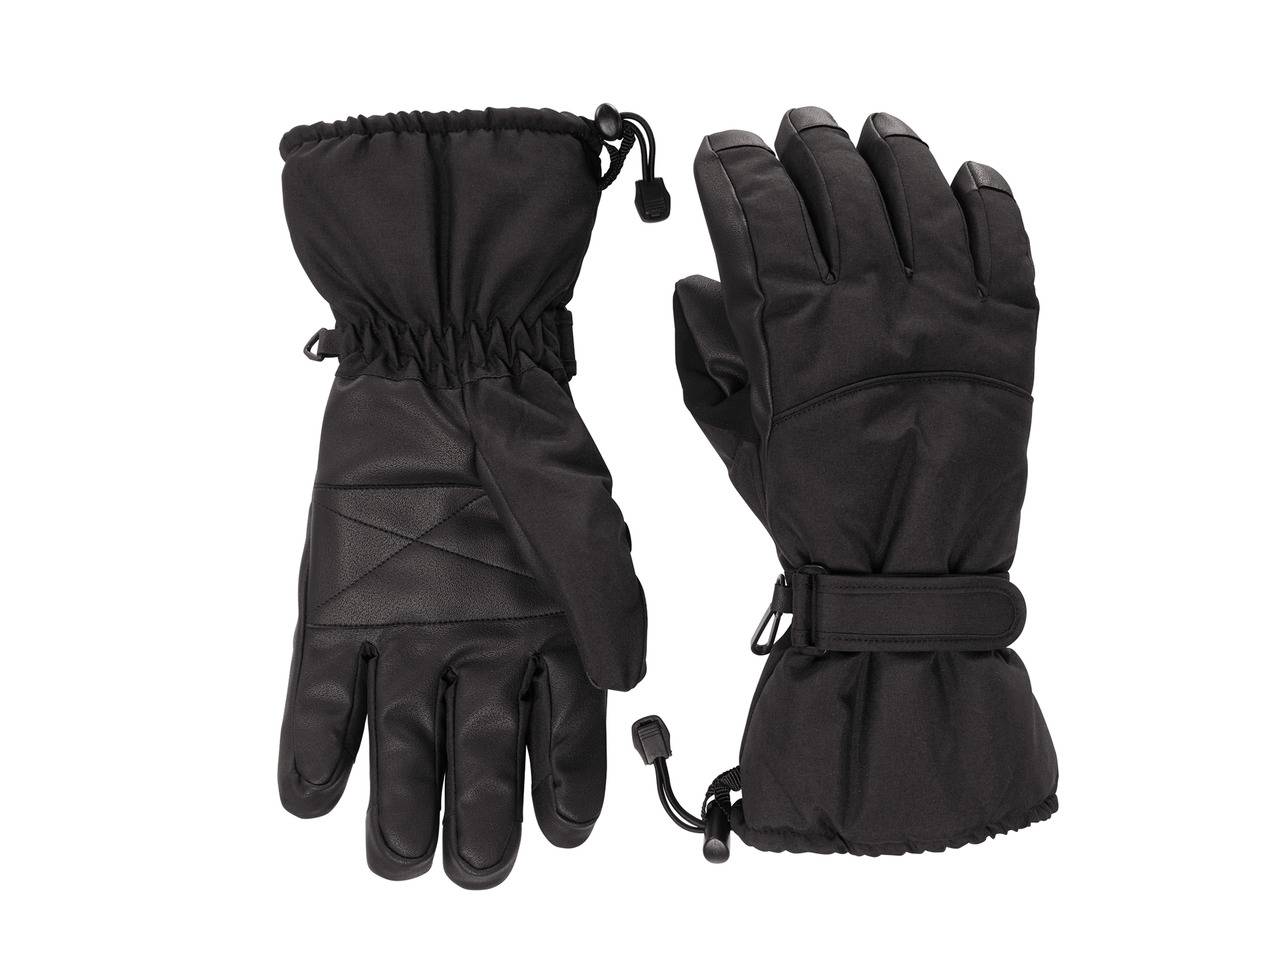 Crivit Winter Sports Gloves1